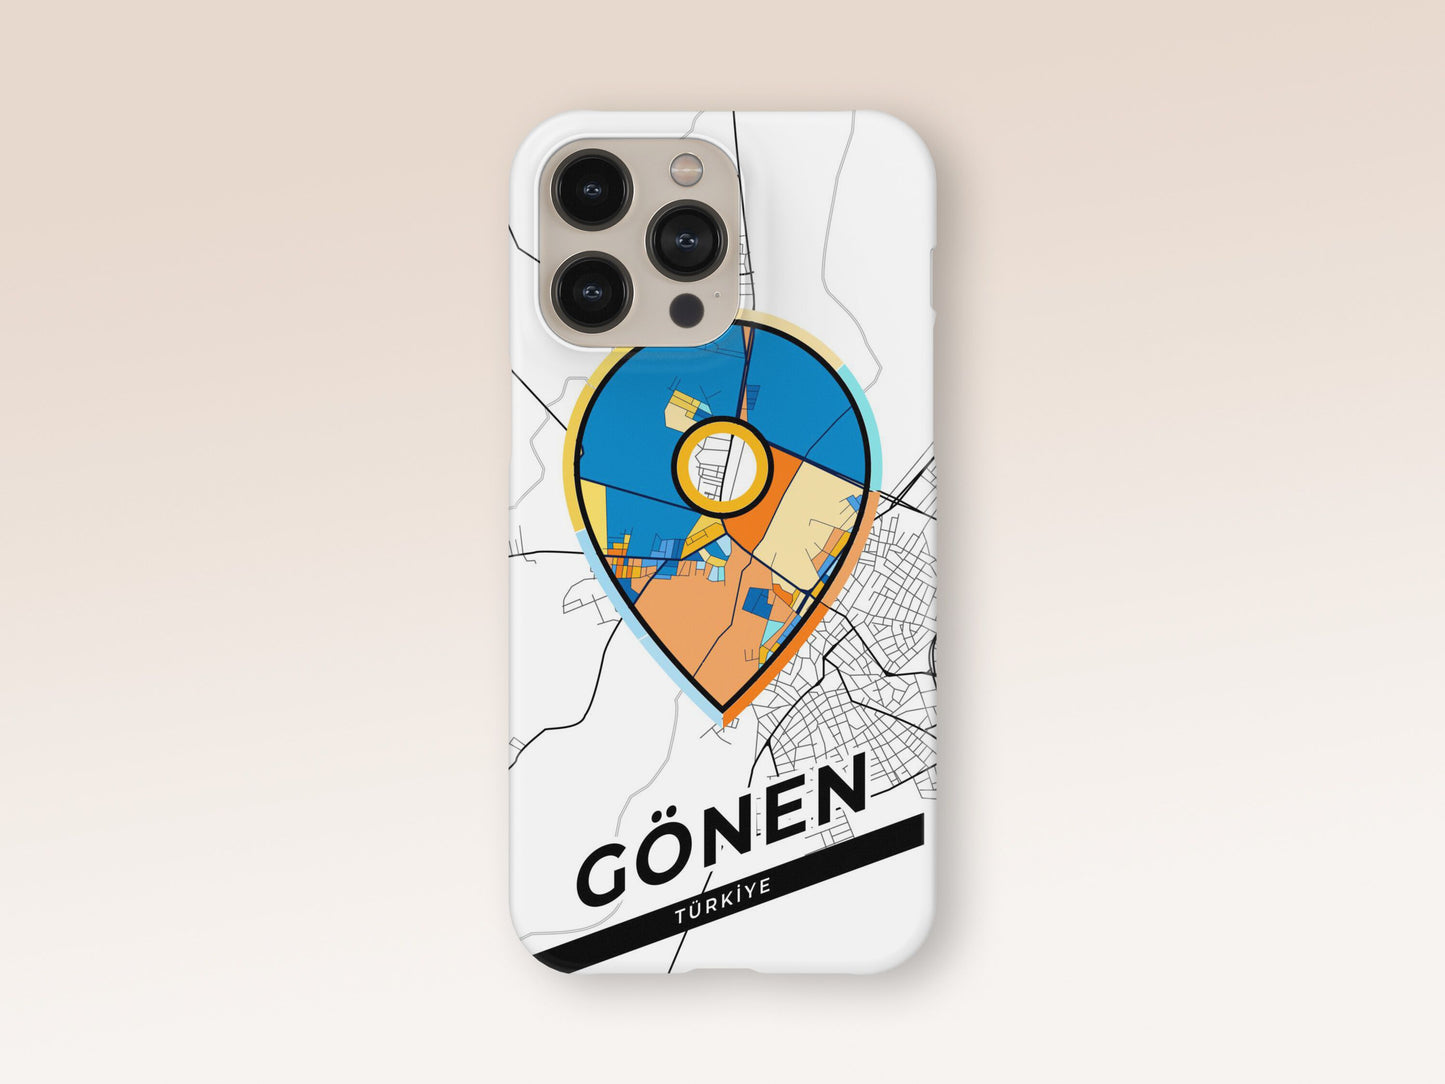 Gönen Turkey slim phone case with colorful icon. Birthday, wedding or housewarming gift. Couple match cases. 1